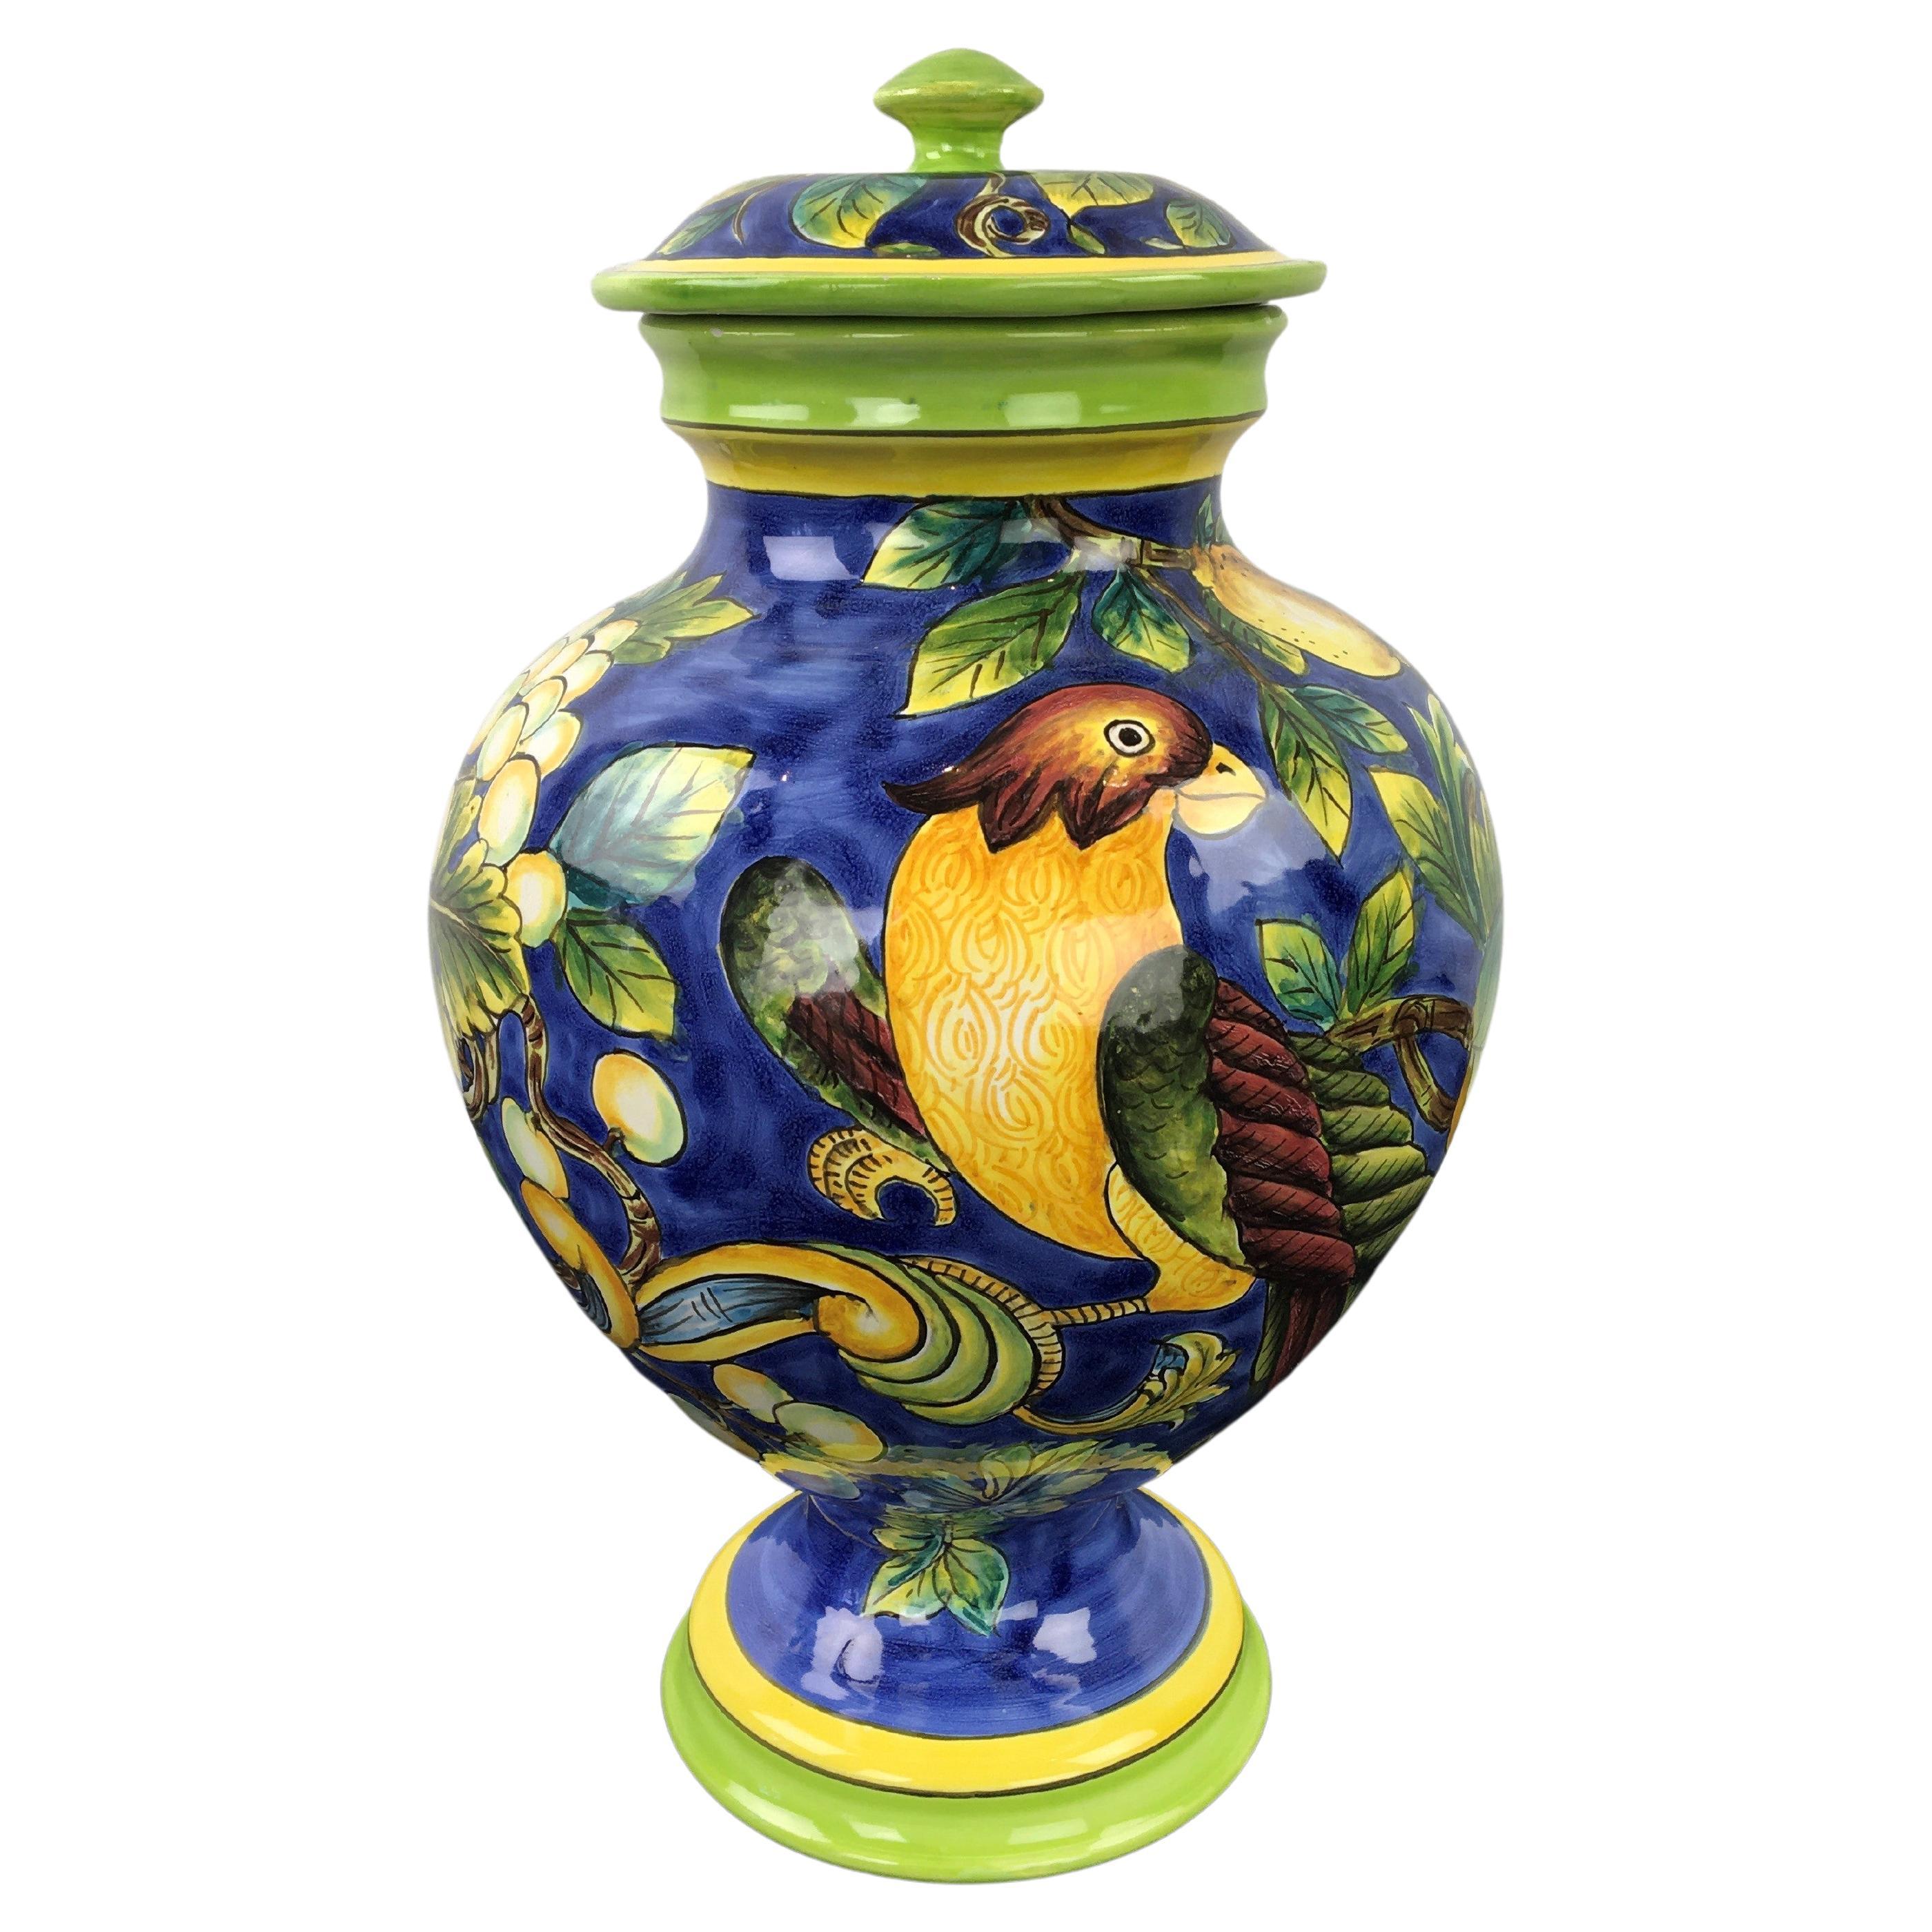 Glazed Blue Ceramic Jar with Bird, Lemons and Lid